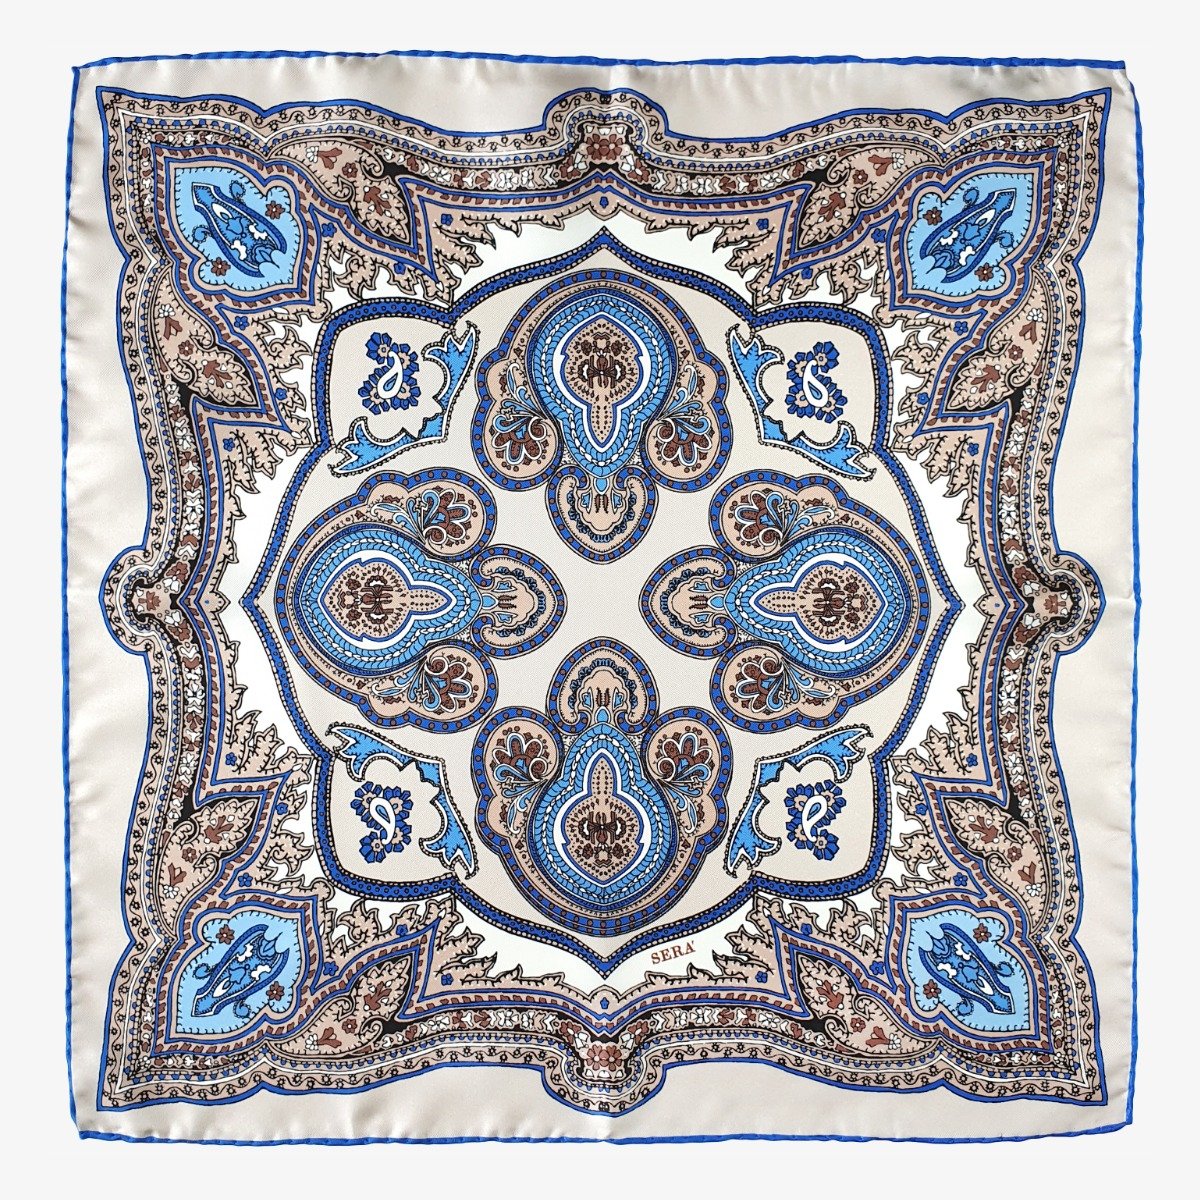 Serà Fine Silk Salina grey and blue silk pocket square